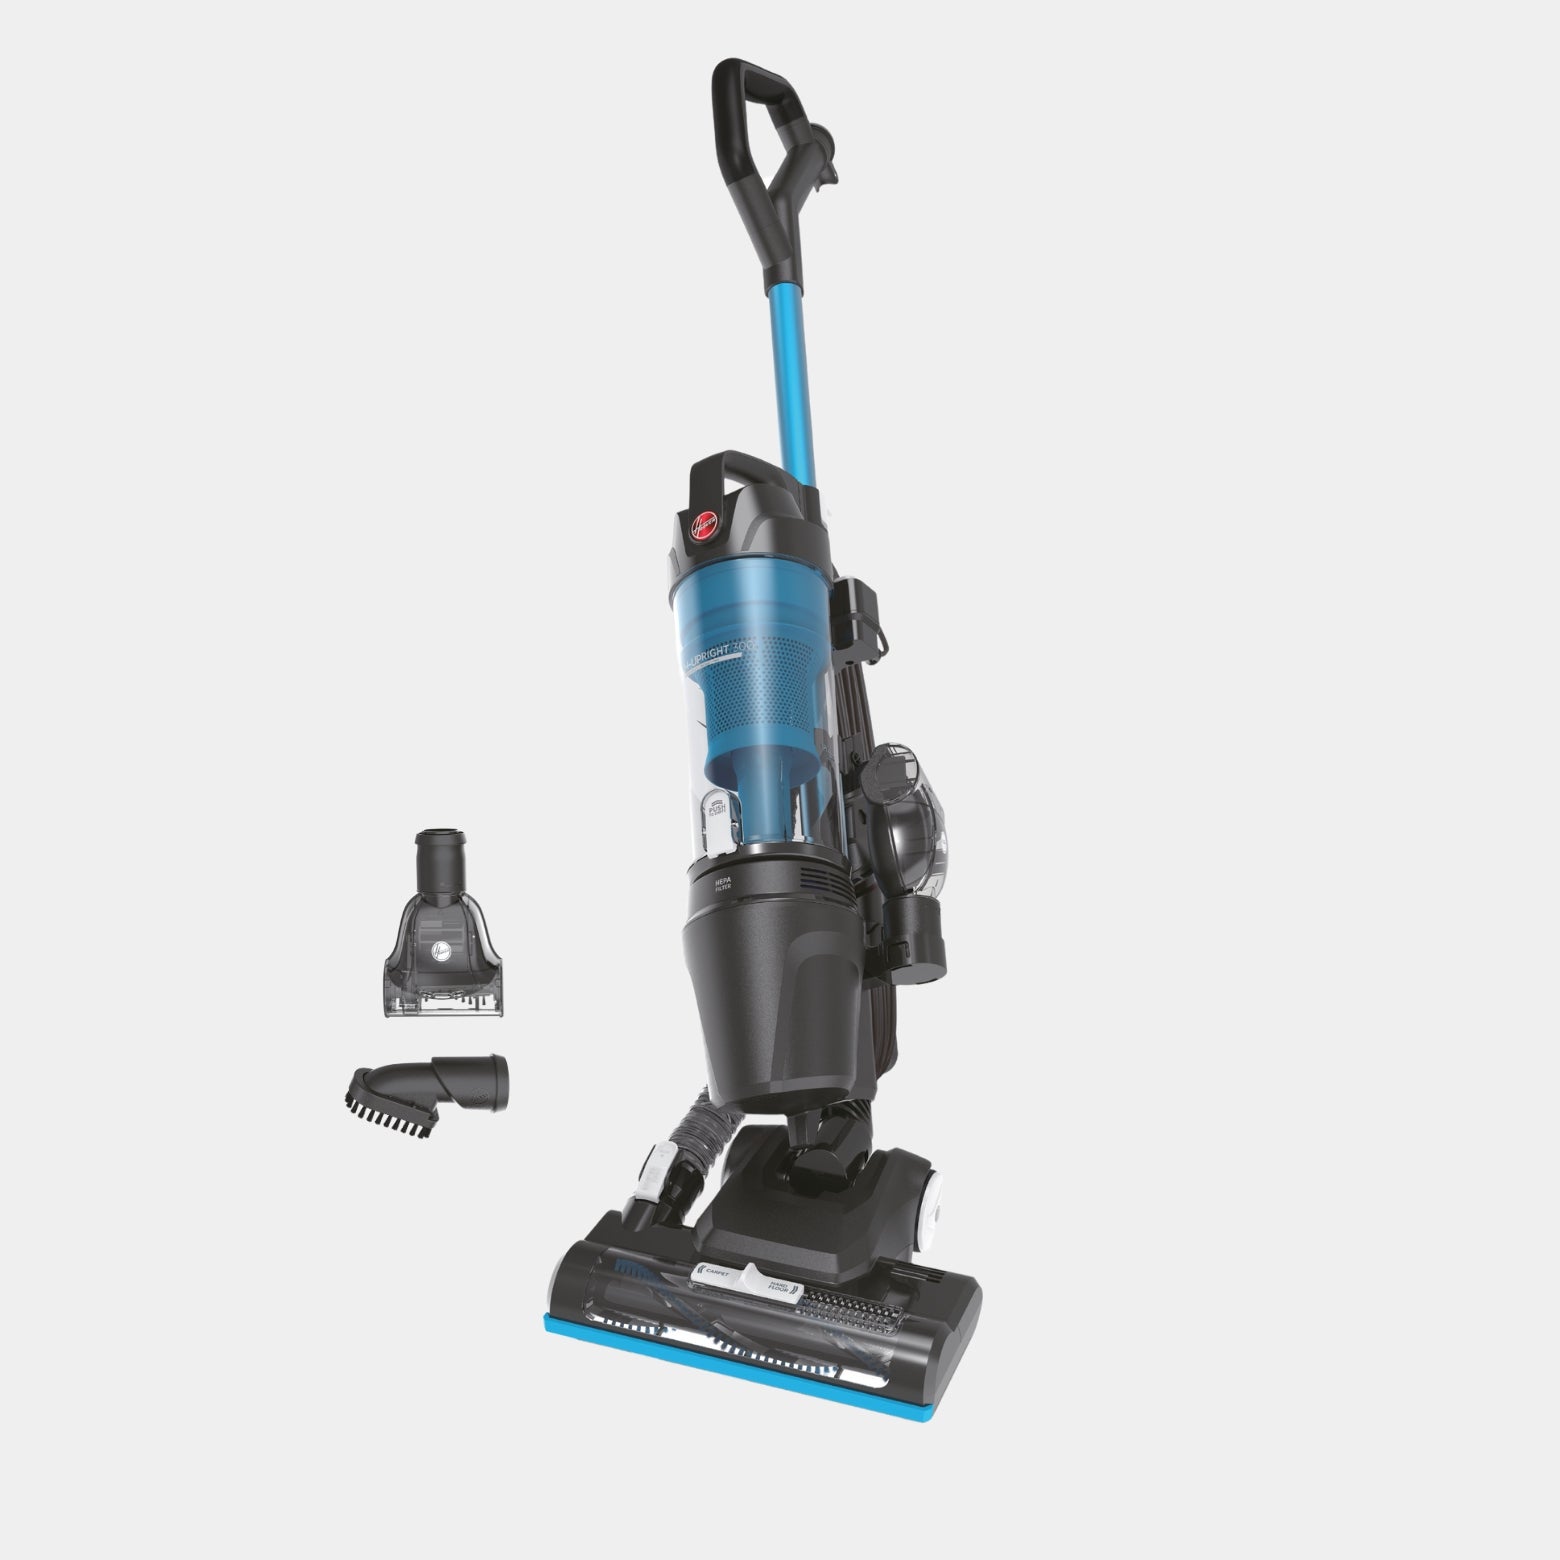 Hoover Hoover Upright Pet Vacuum Cleaner, Blue - Upright 300